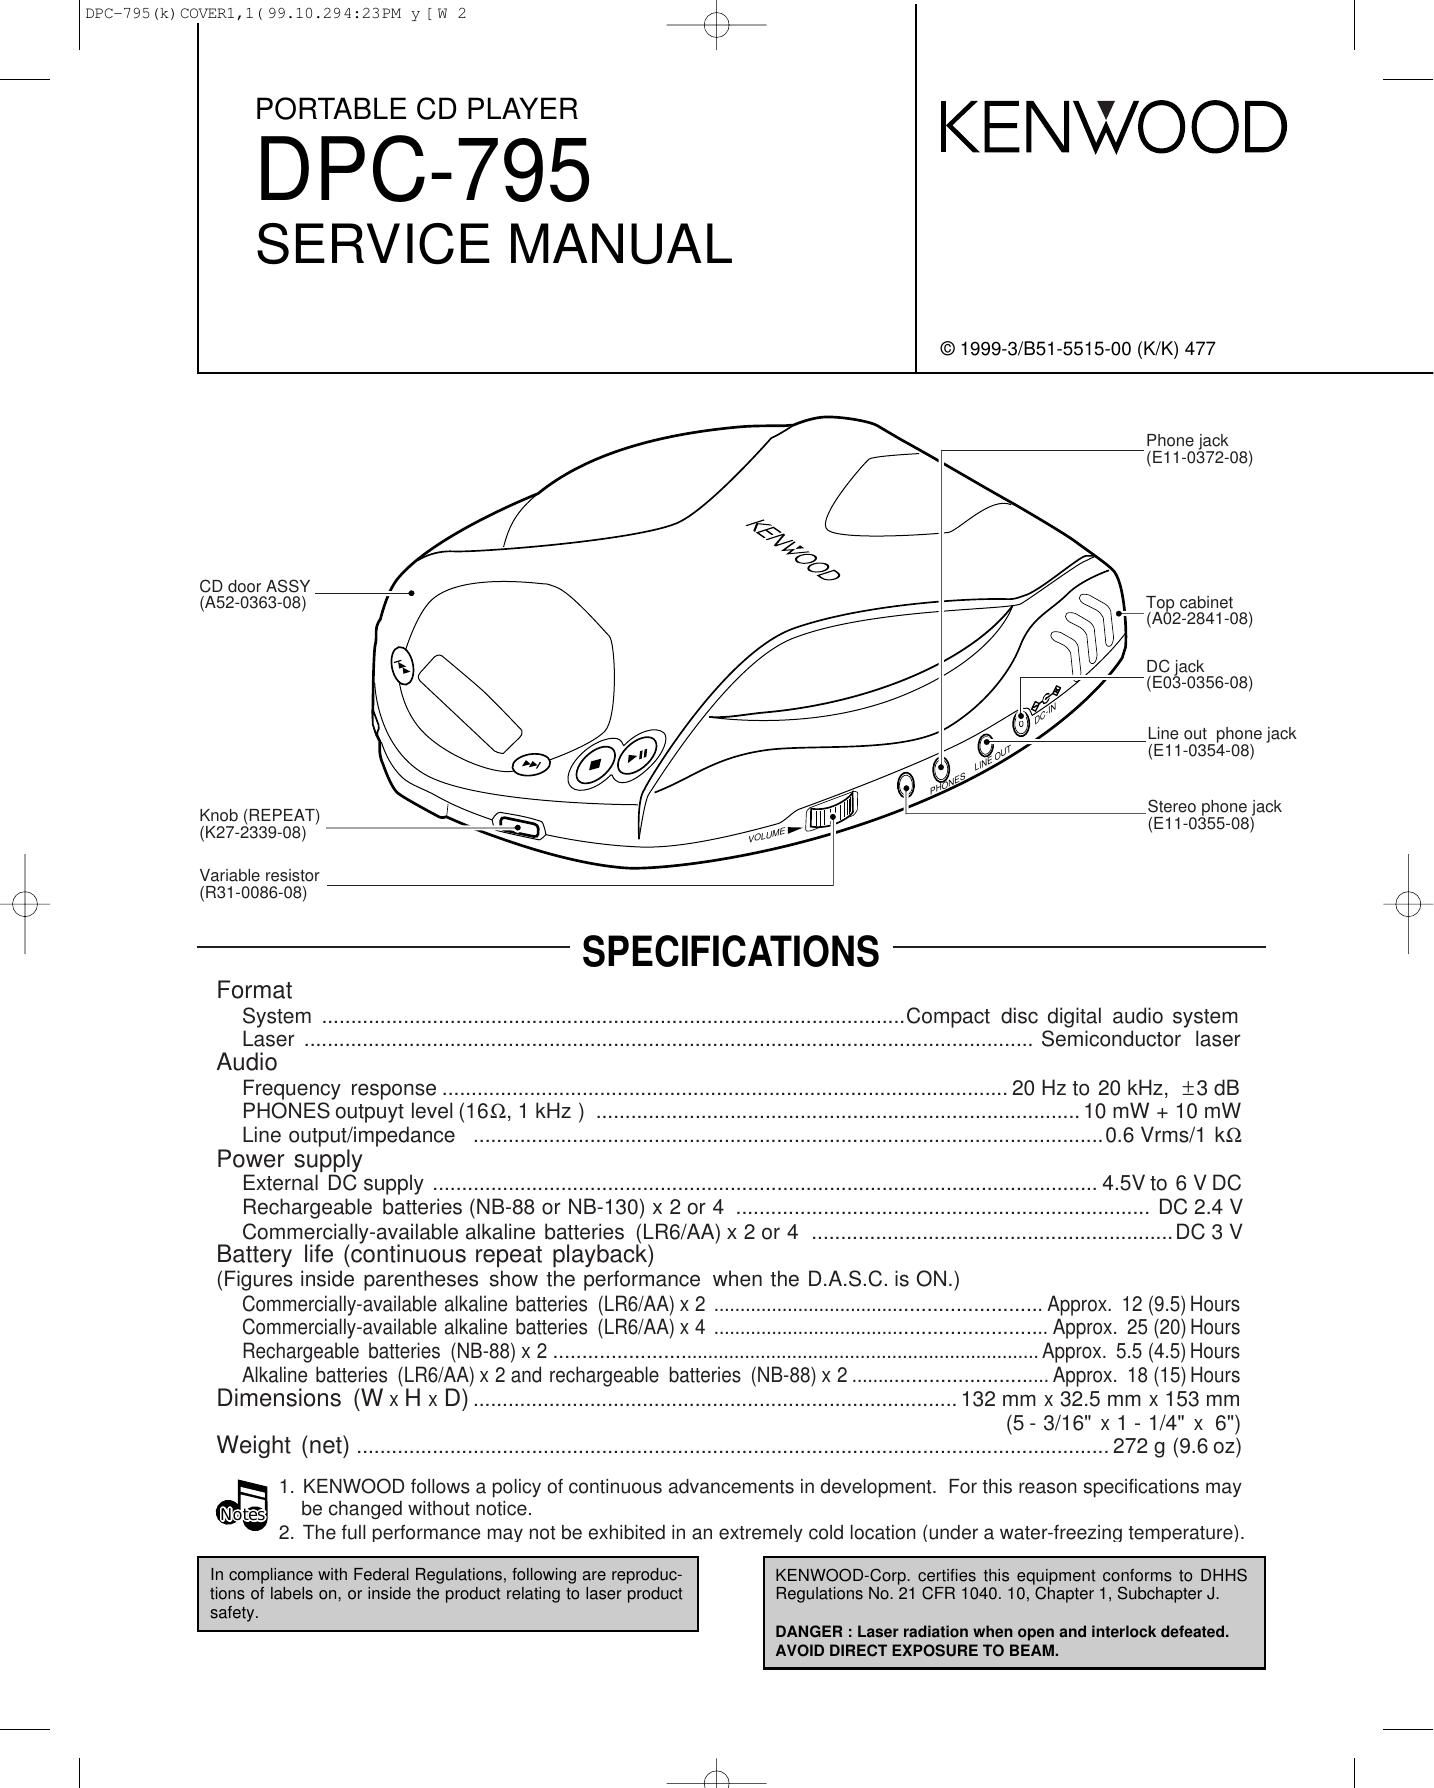 Kenwood DPC 795 Service Manual